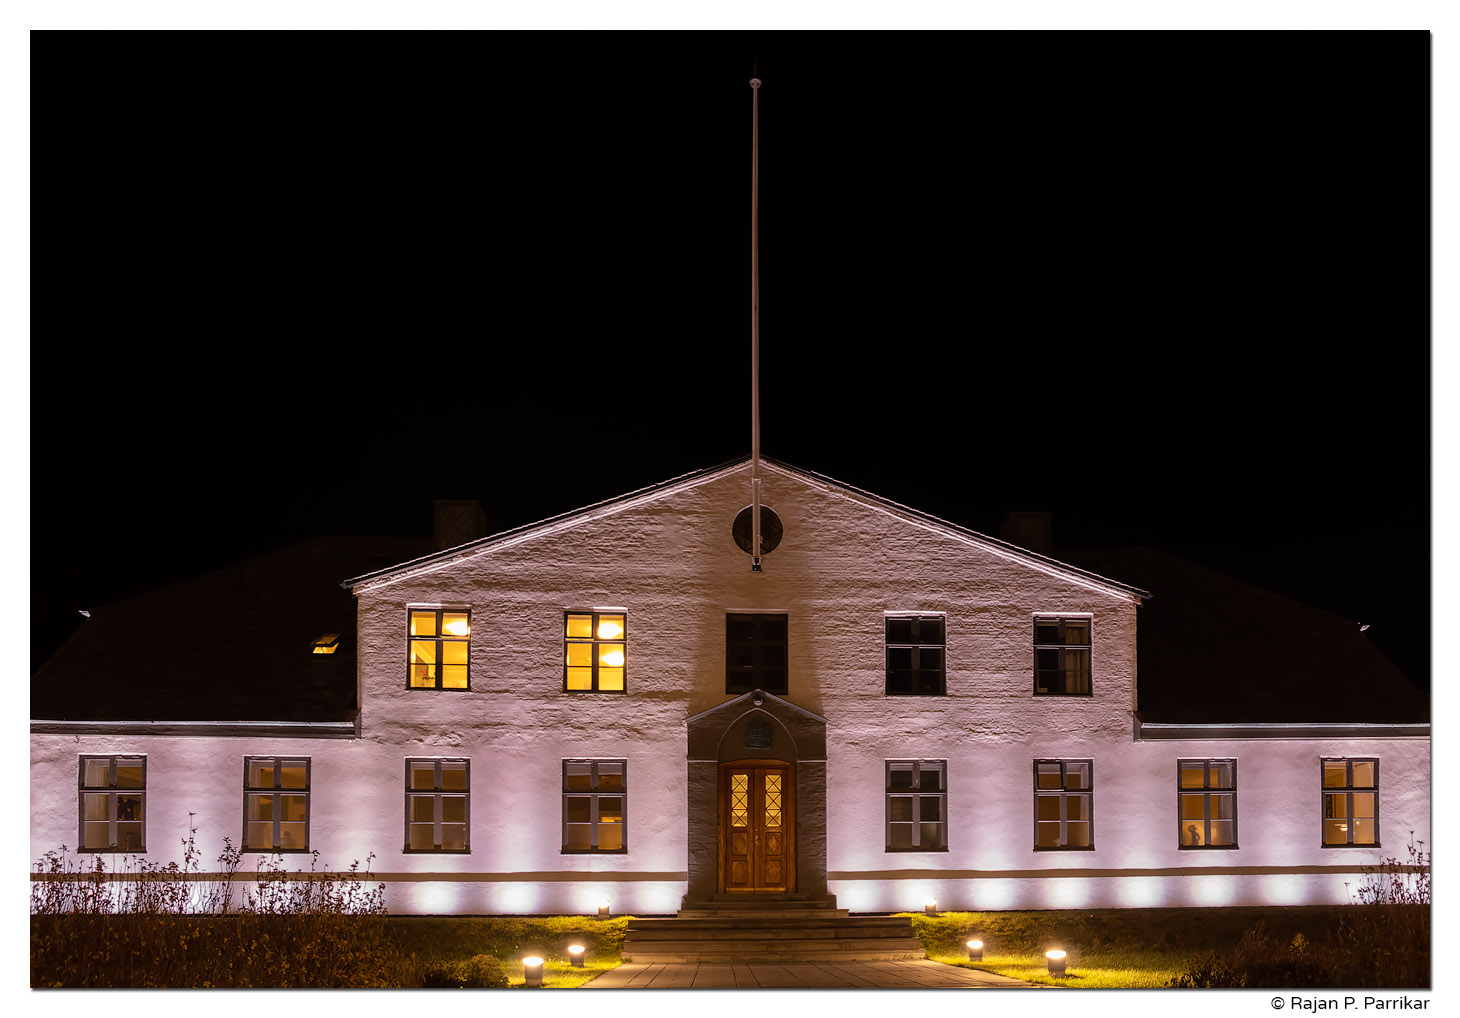 Prime Minister's Office on Lækjargata, Reykjavík, Iceland